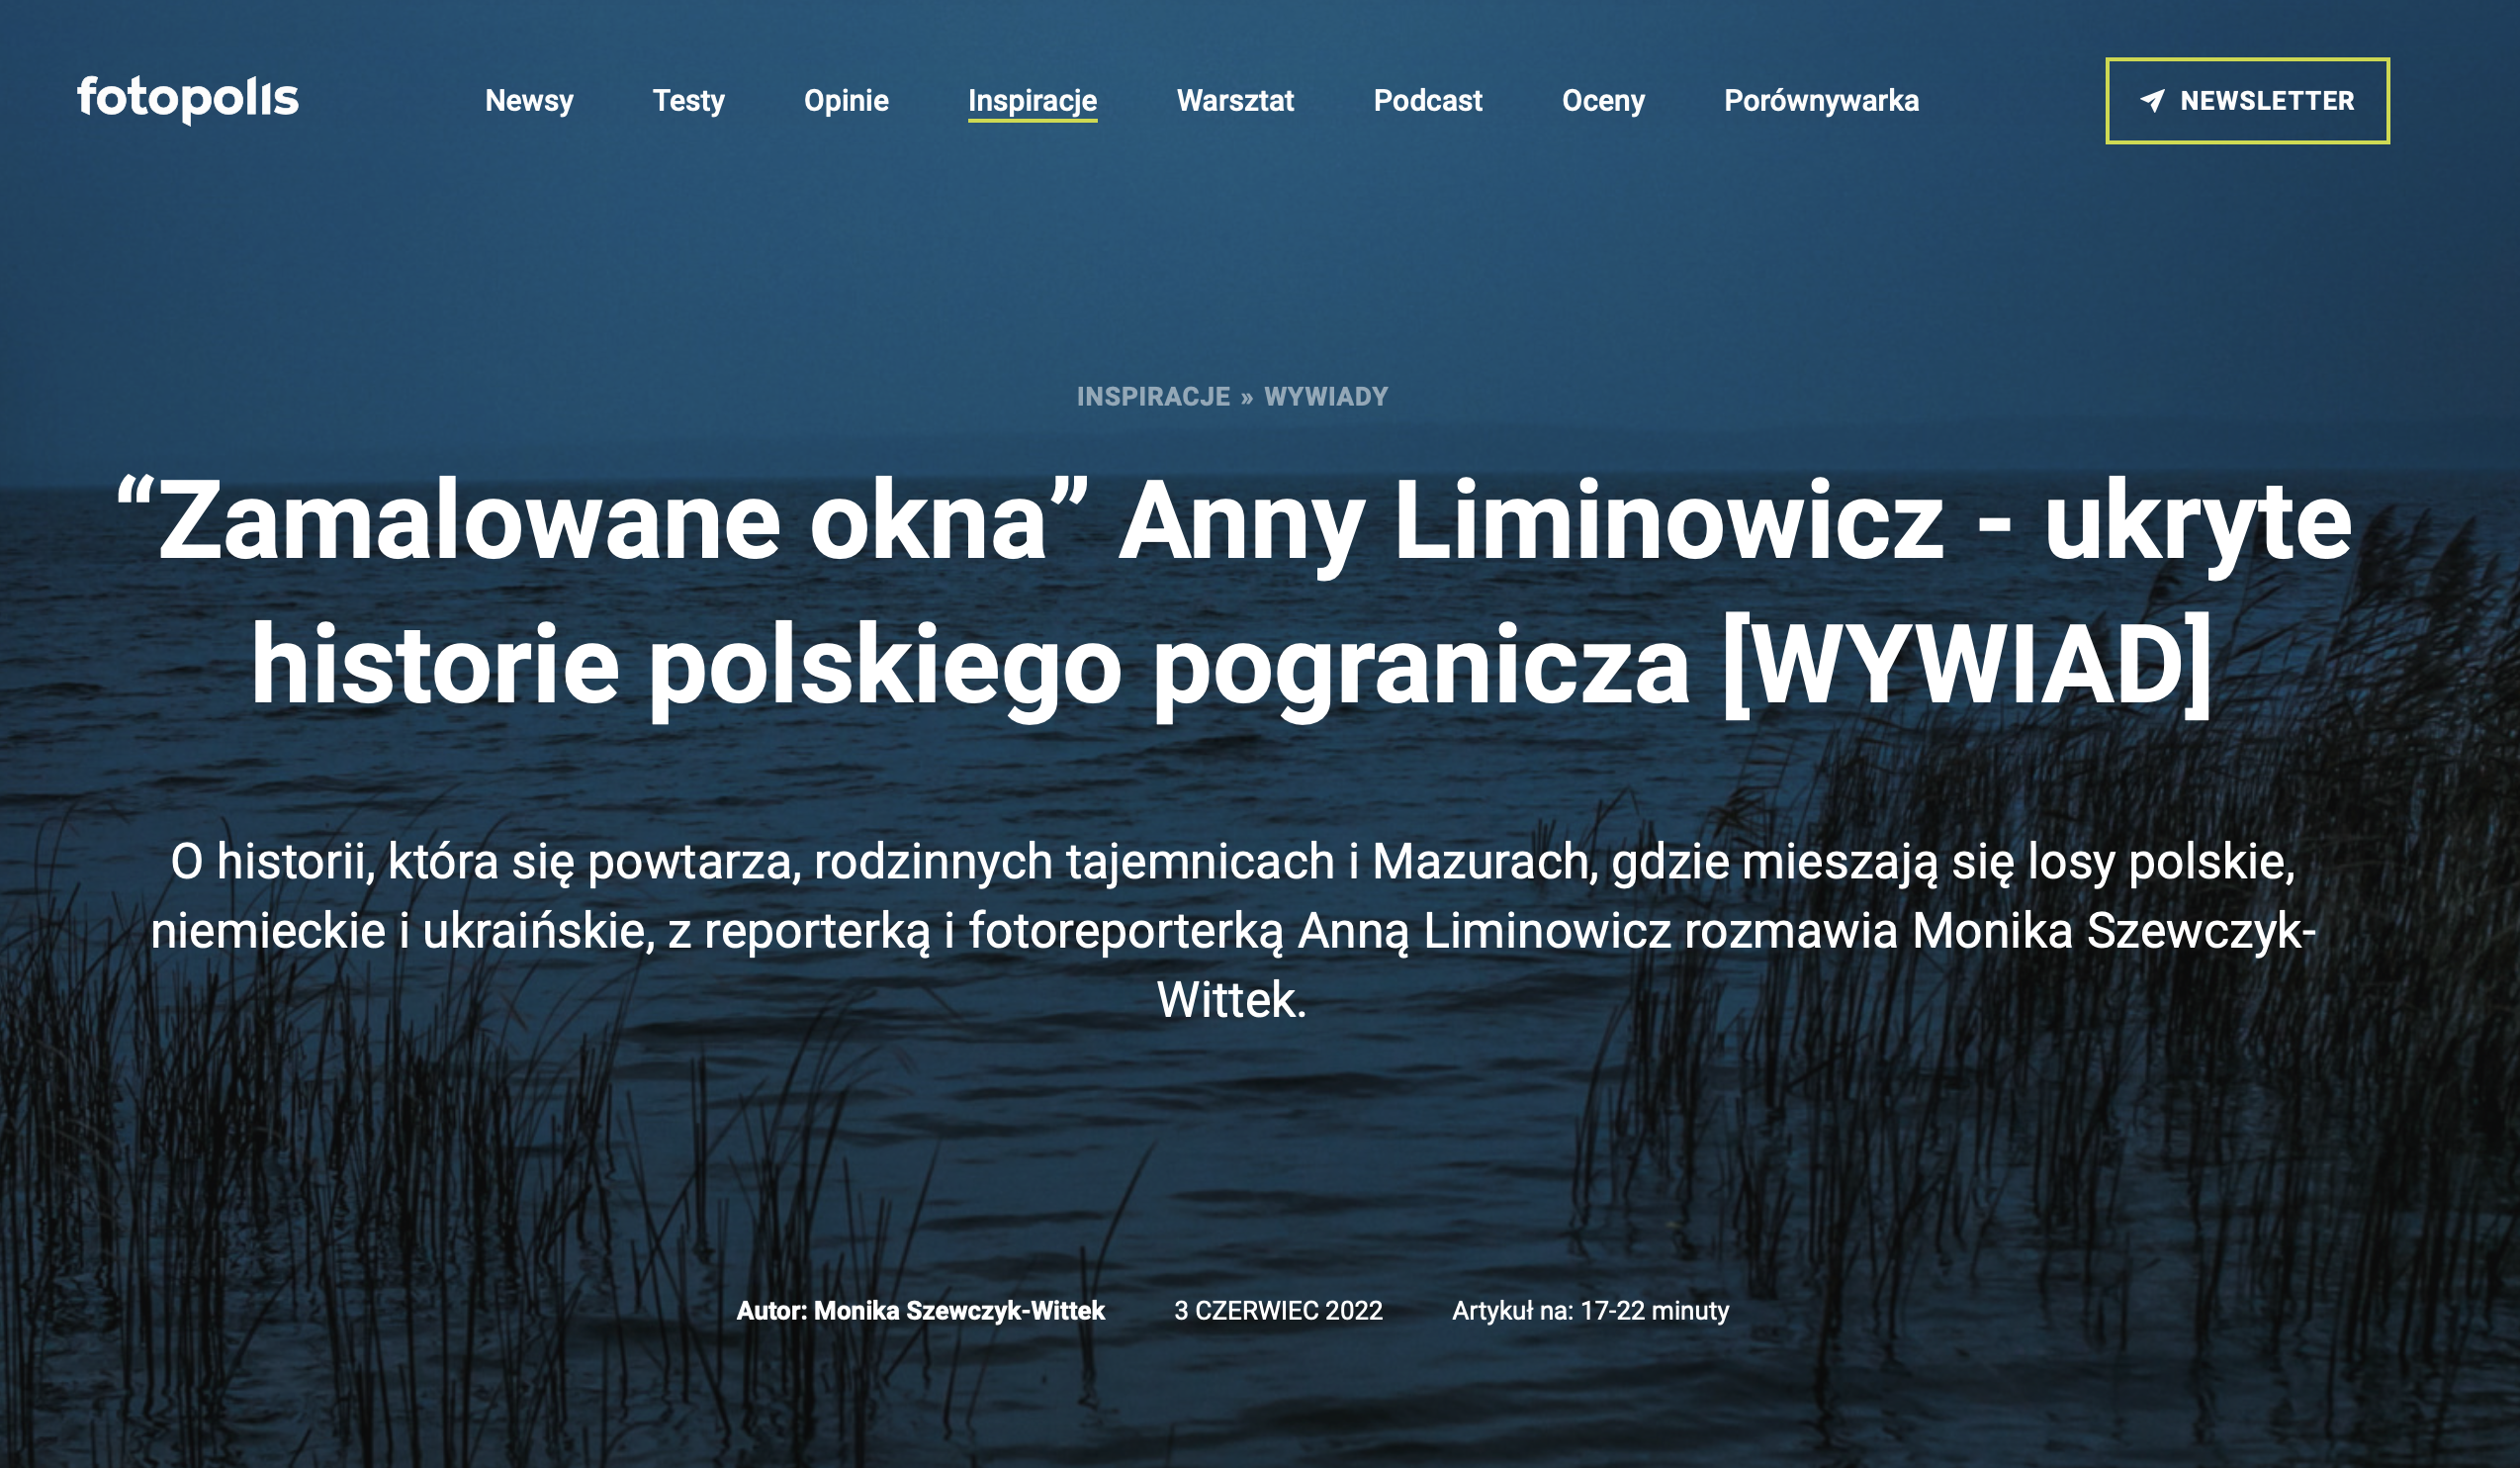 "Zamalowane okna " ( Painted over windows) by Anna Liminowicz - hidden stories of the Polish border region [INTERVIEW].